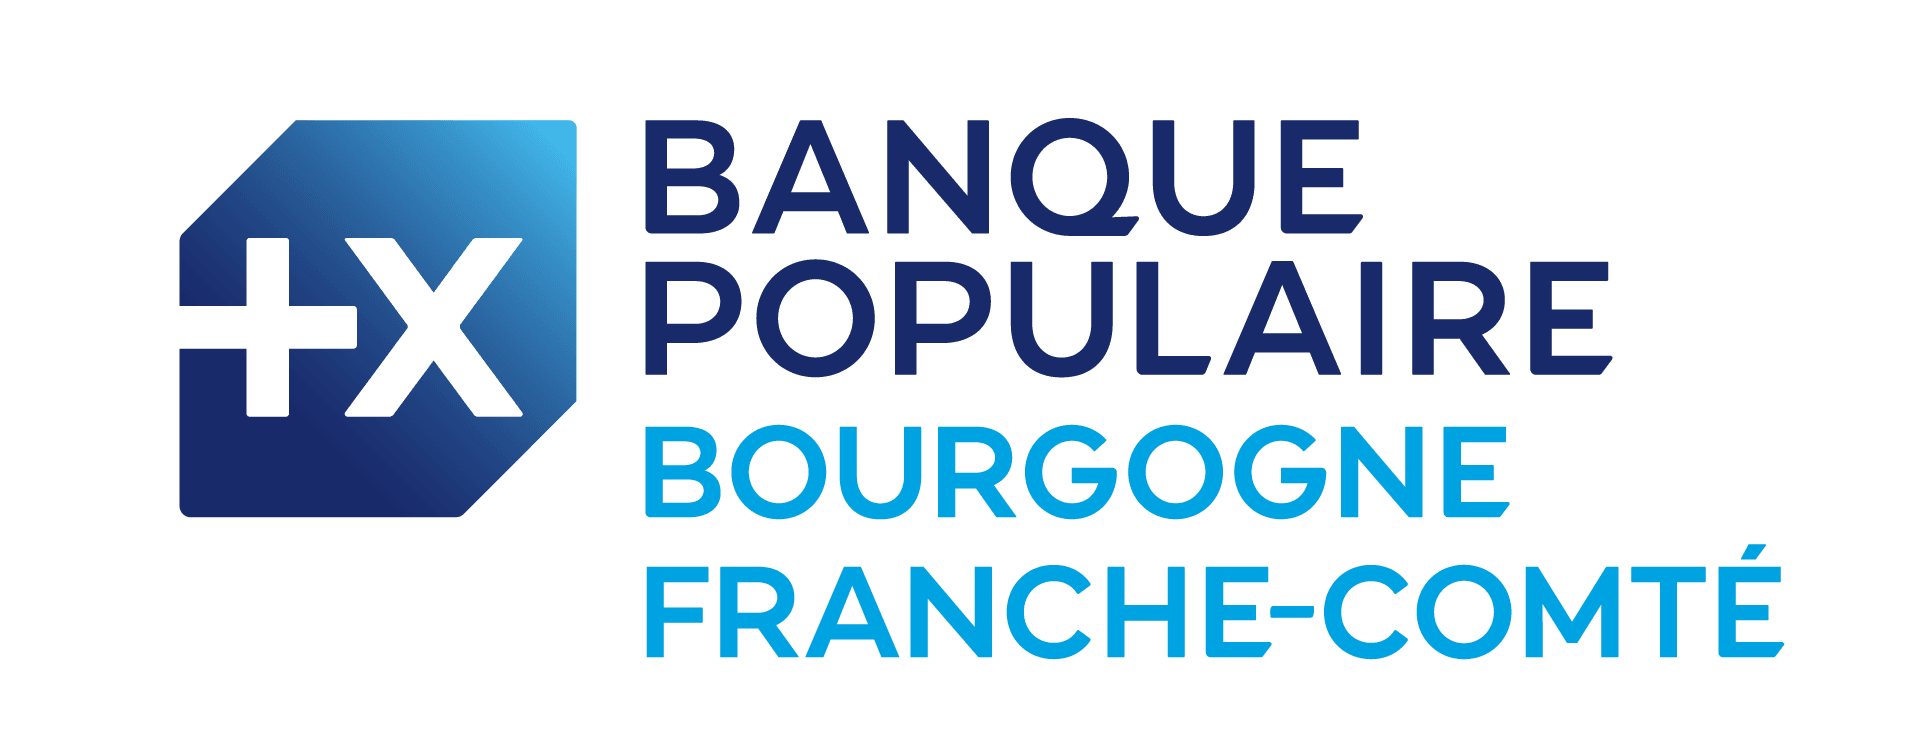 banque_populaire_bfc.png